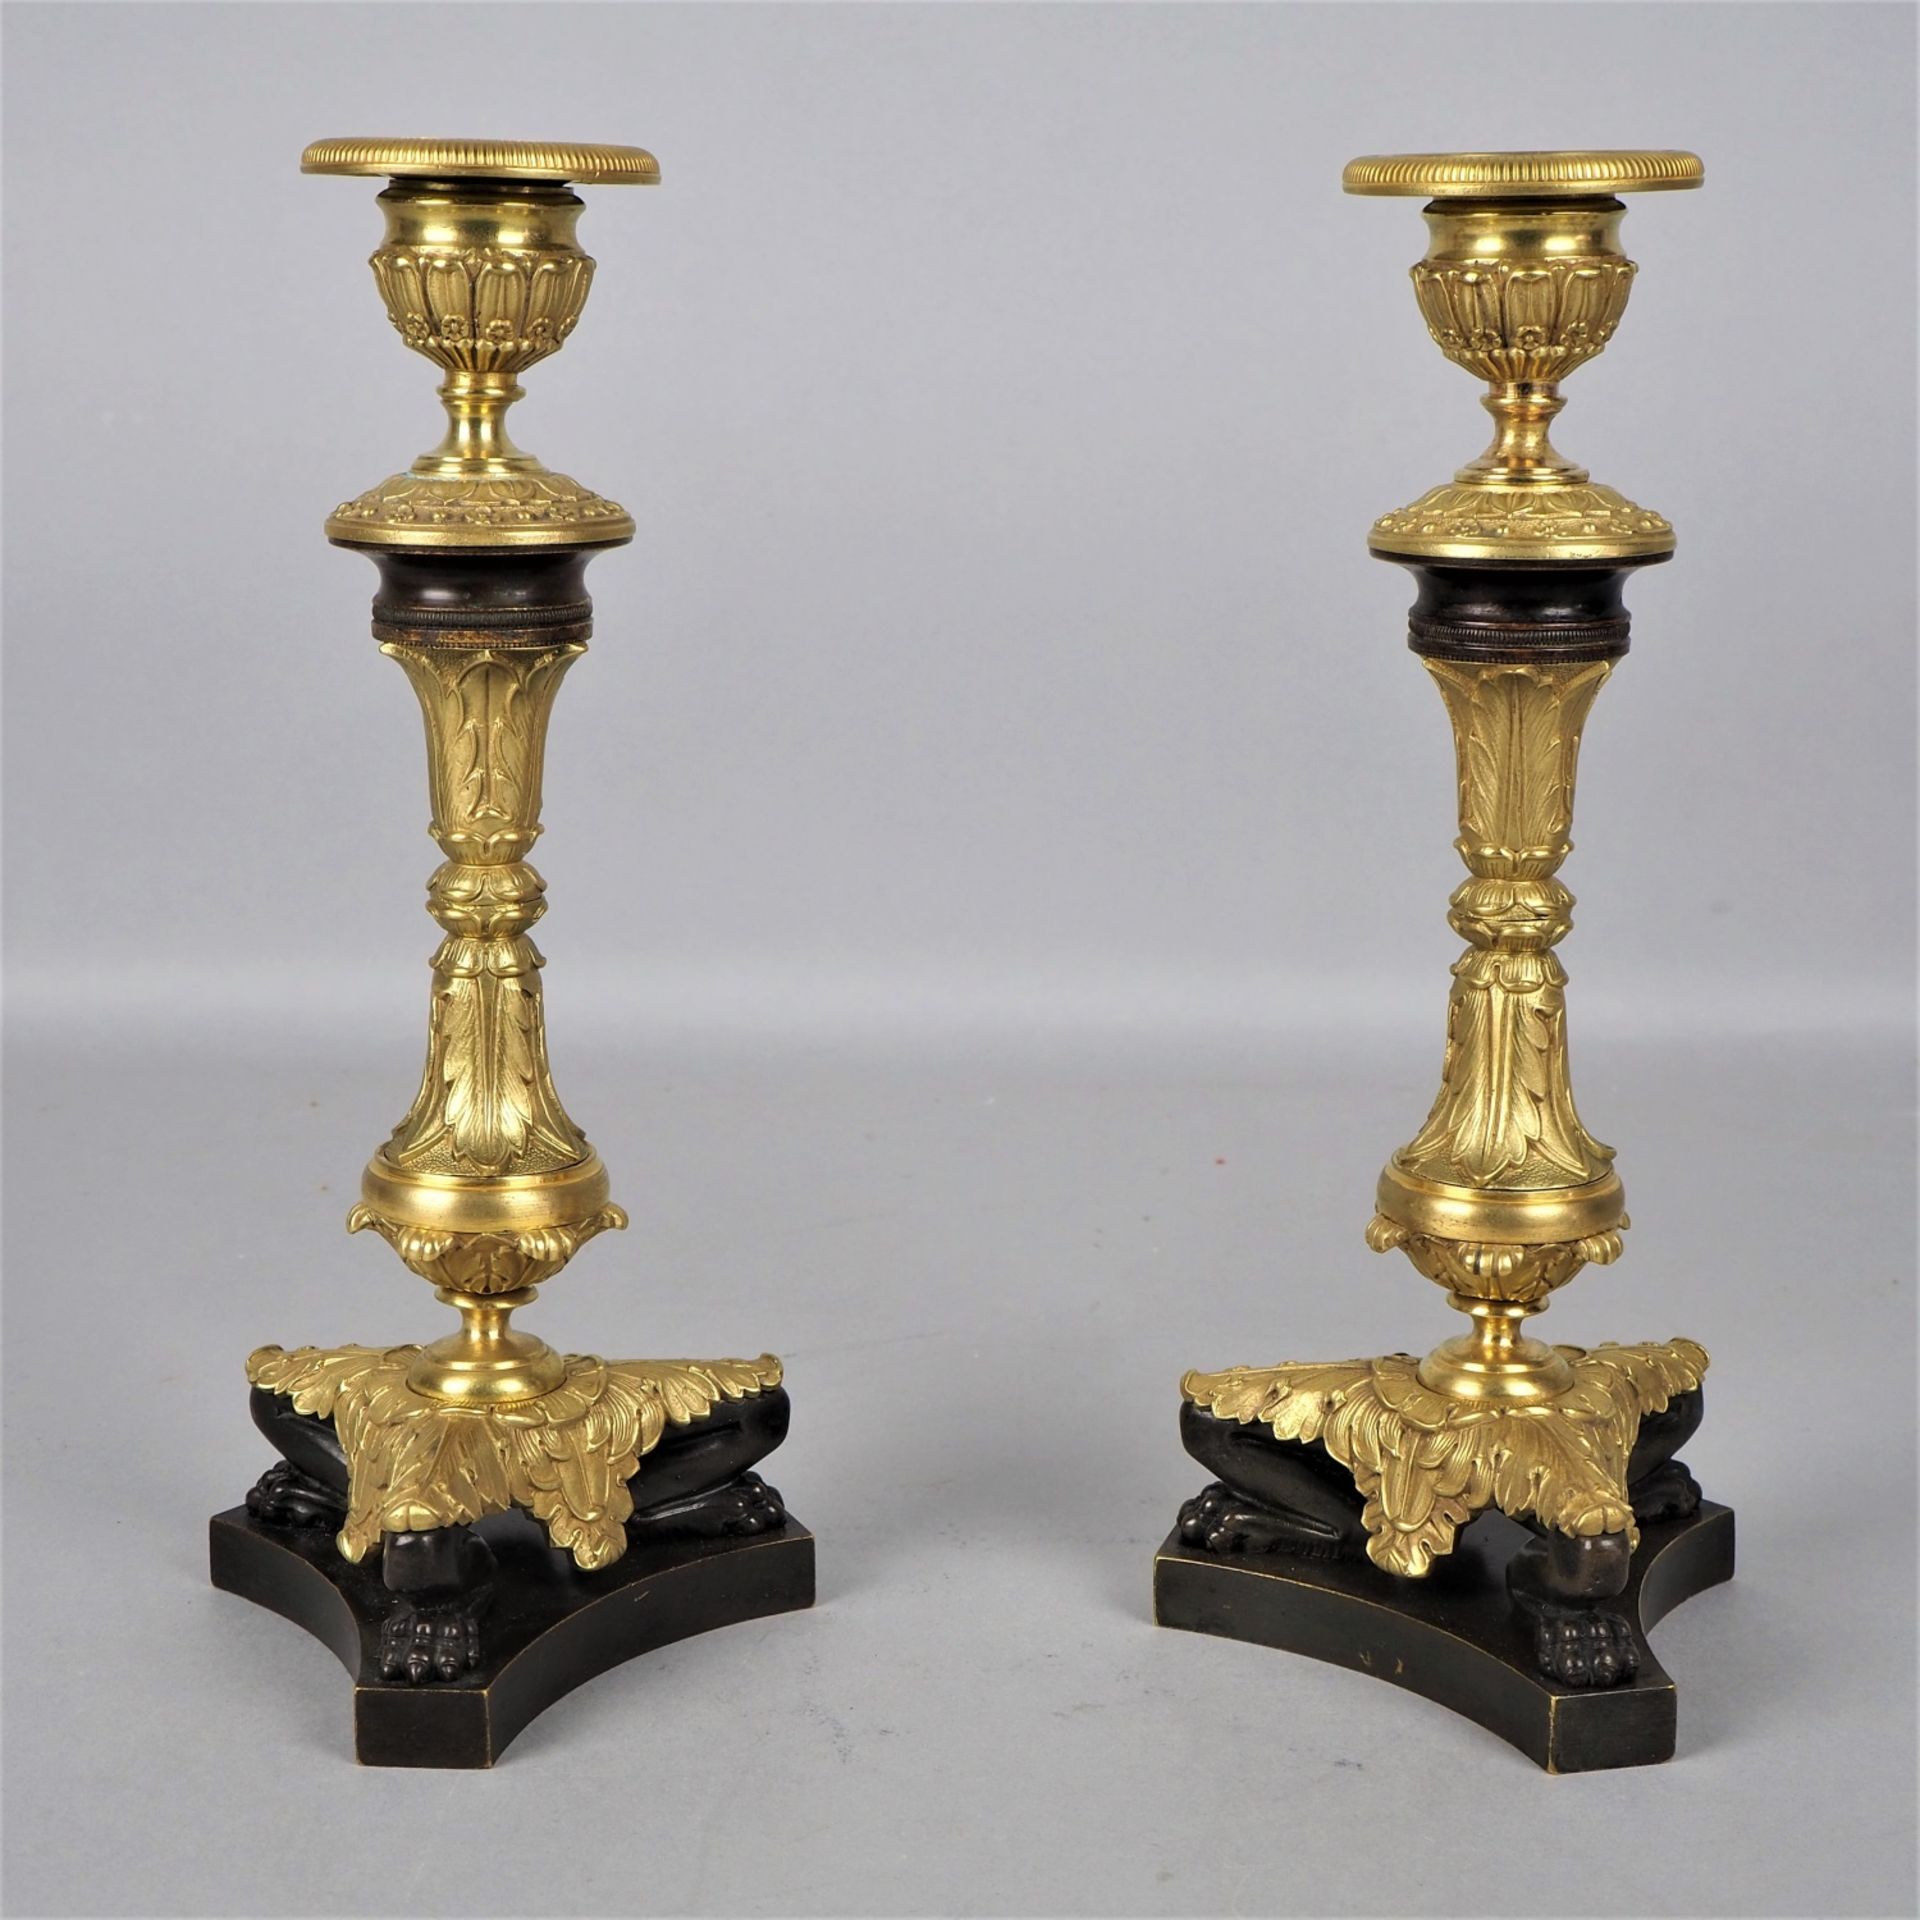 Pair of Empire candlesticks, France circa 1840